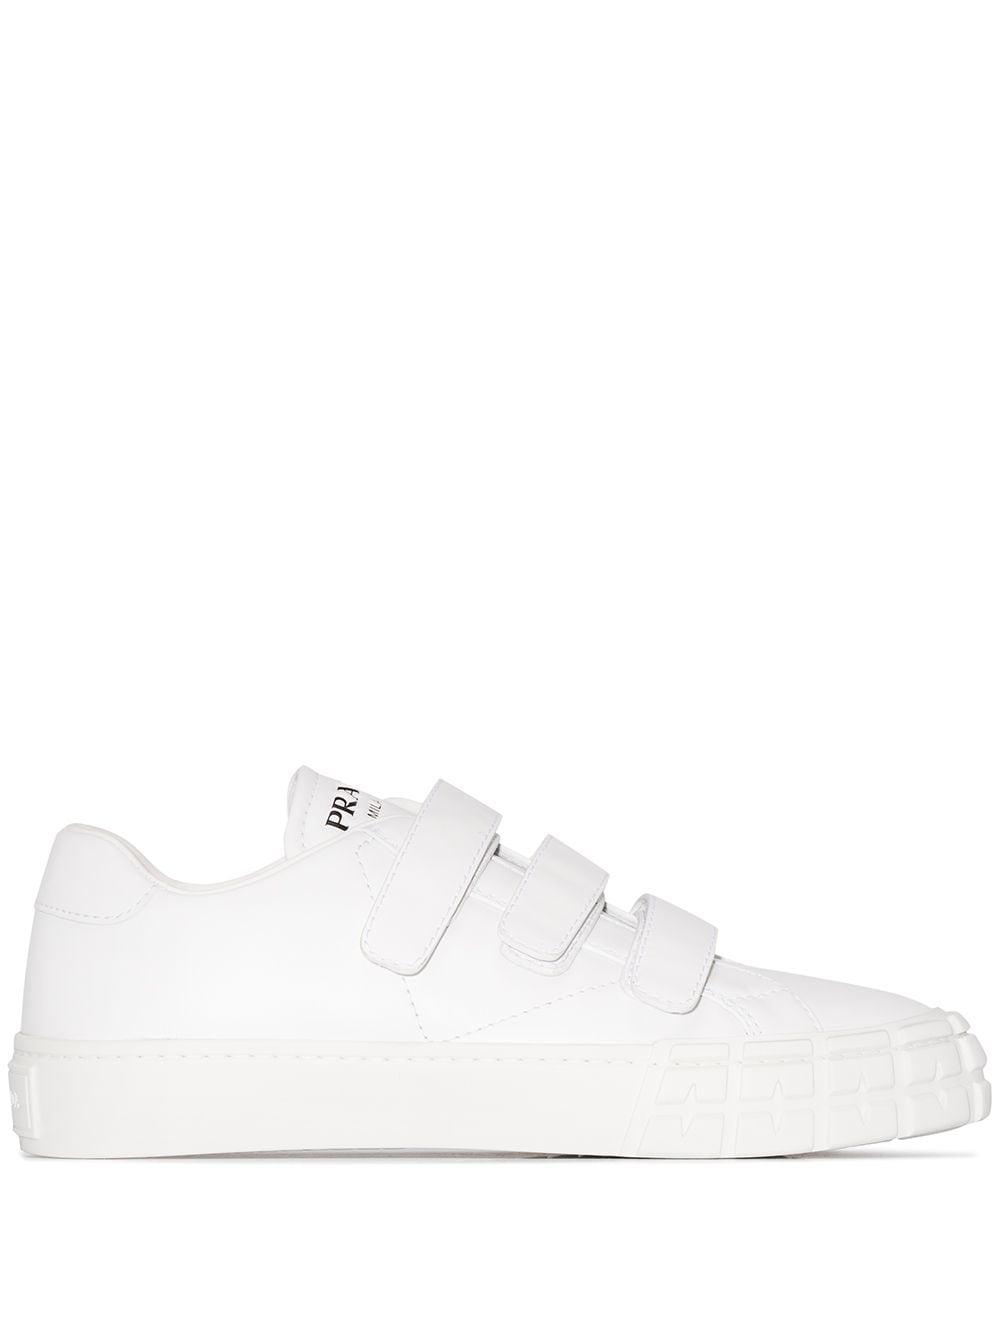 Prada Wheel Velcro Sneakers in White | Lyst